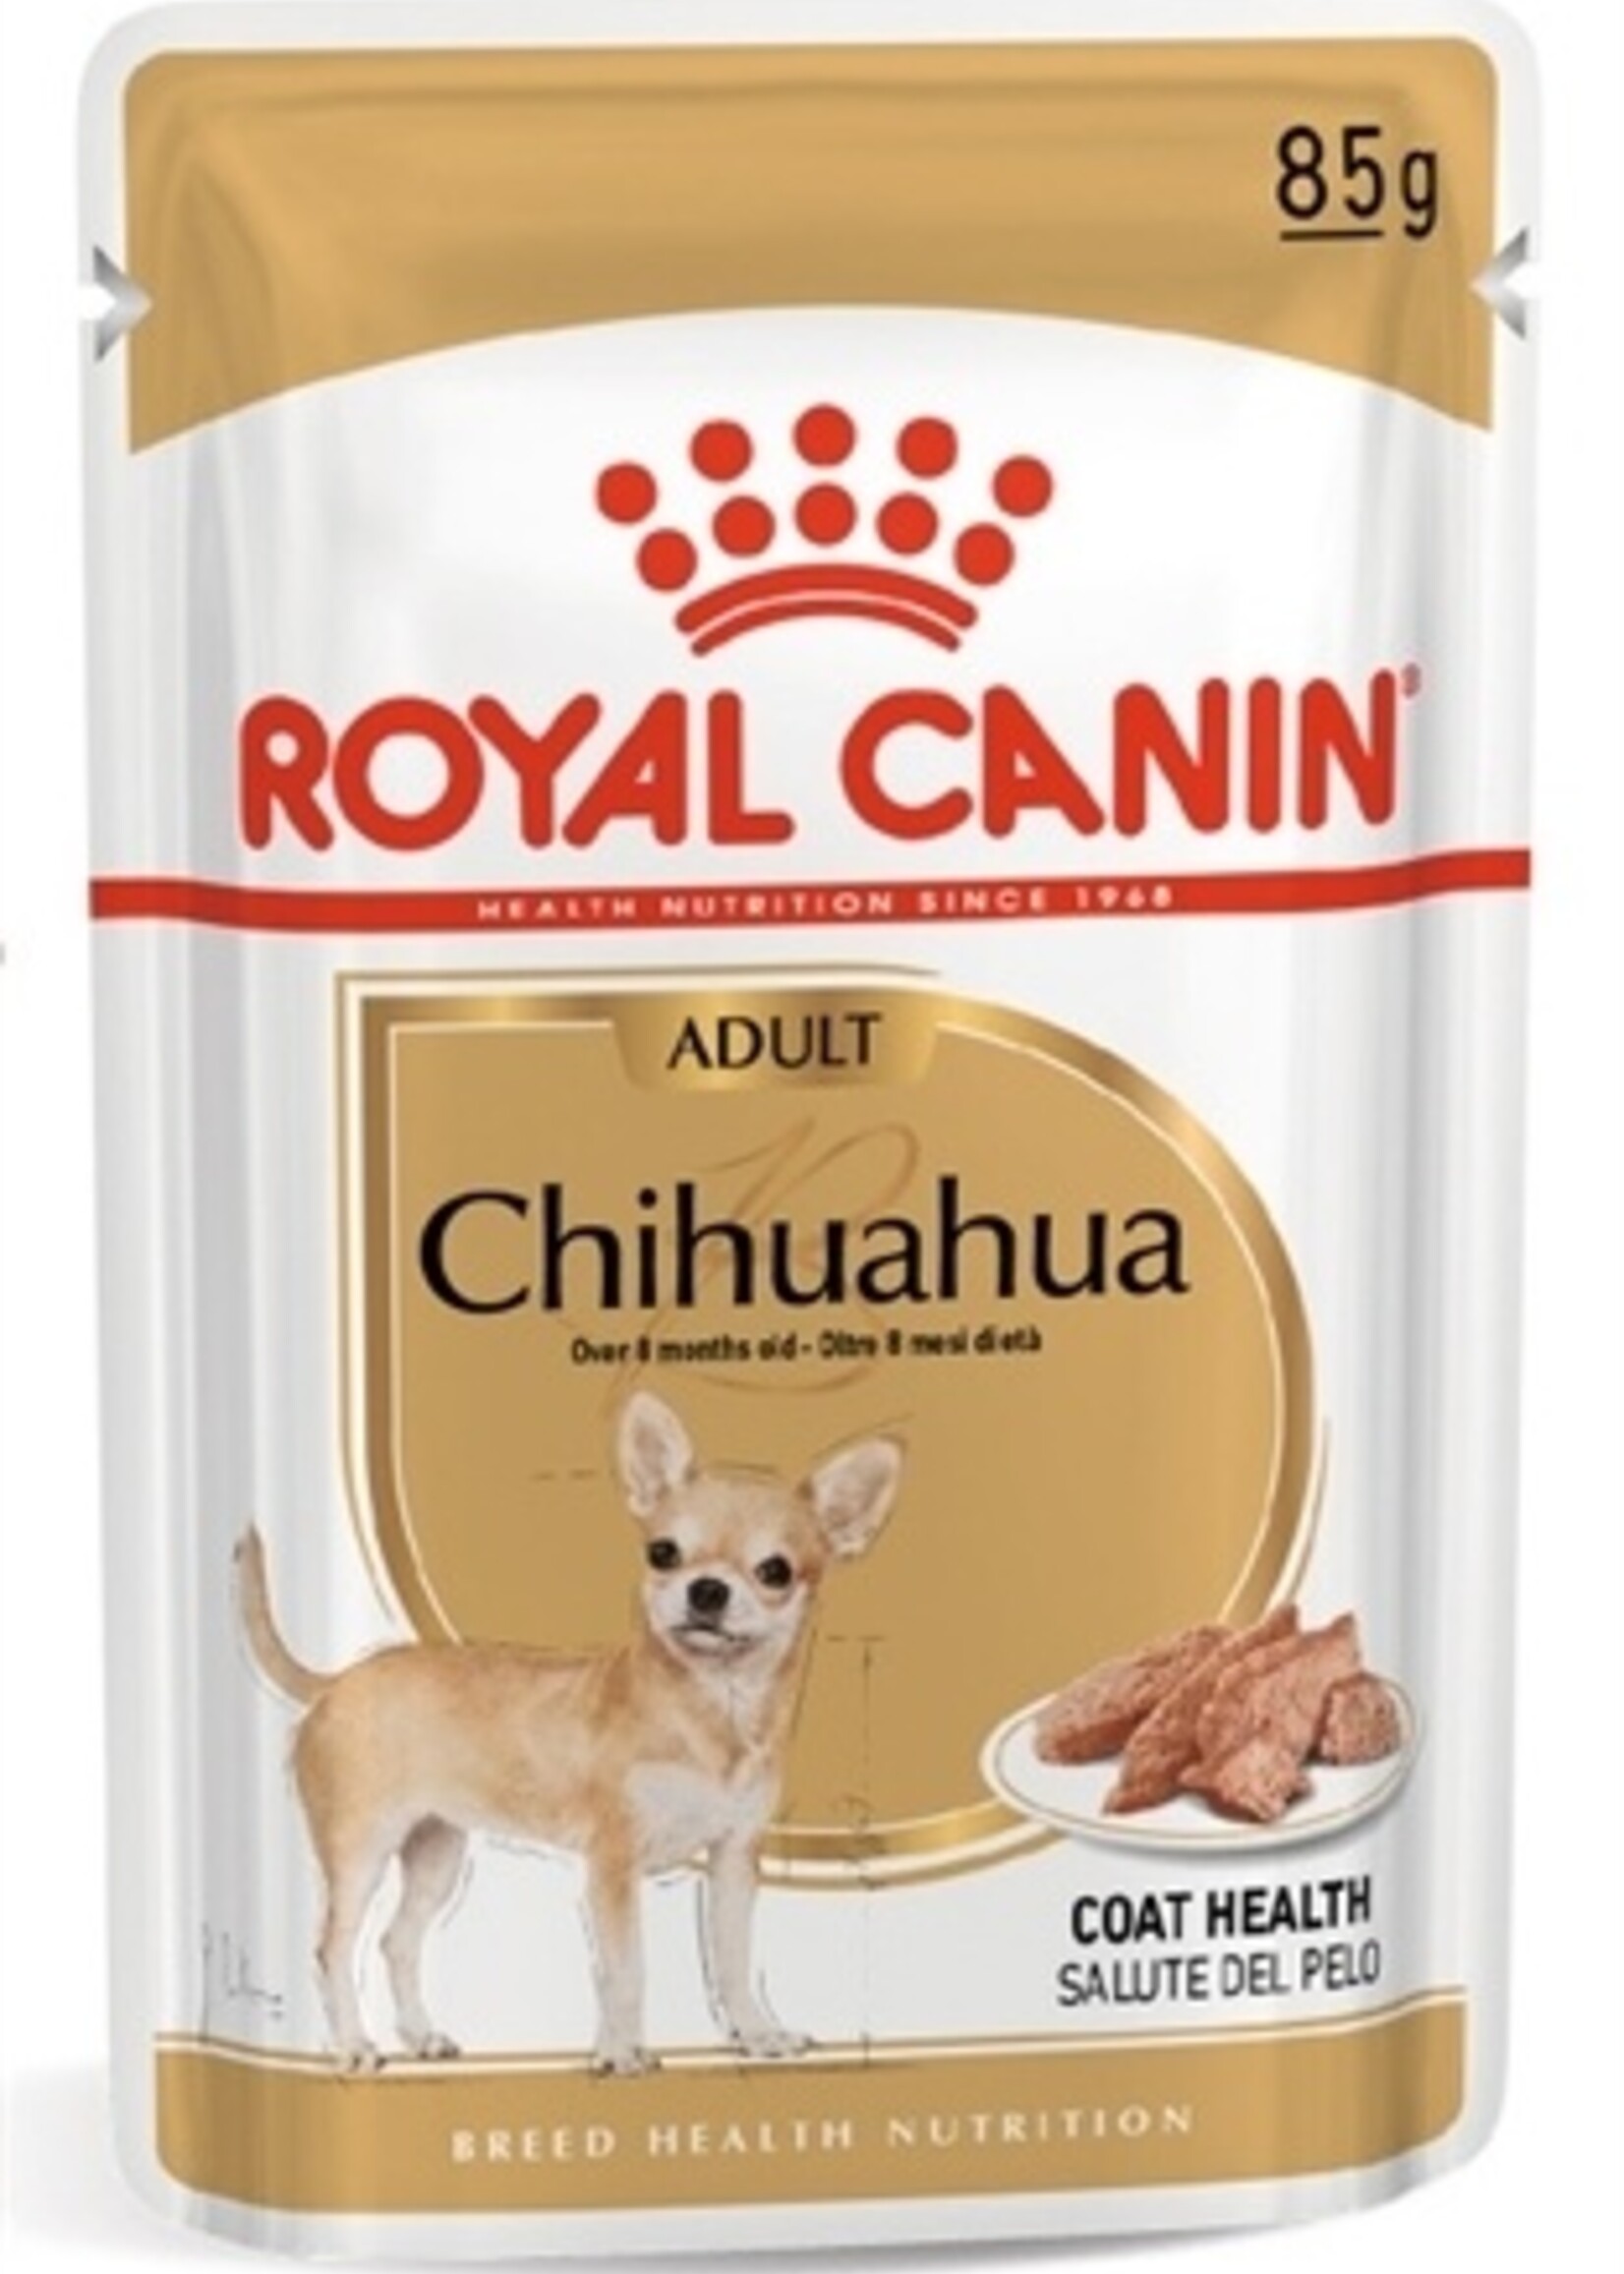 Royal canin Royal canin chihuahua pouch